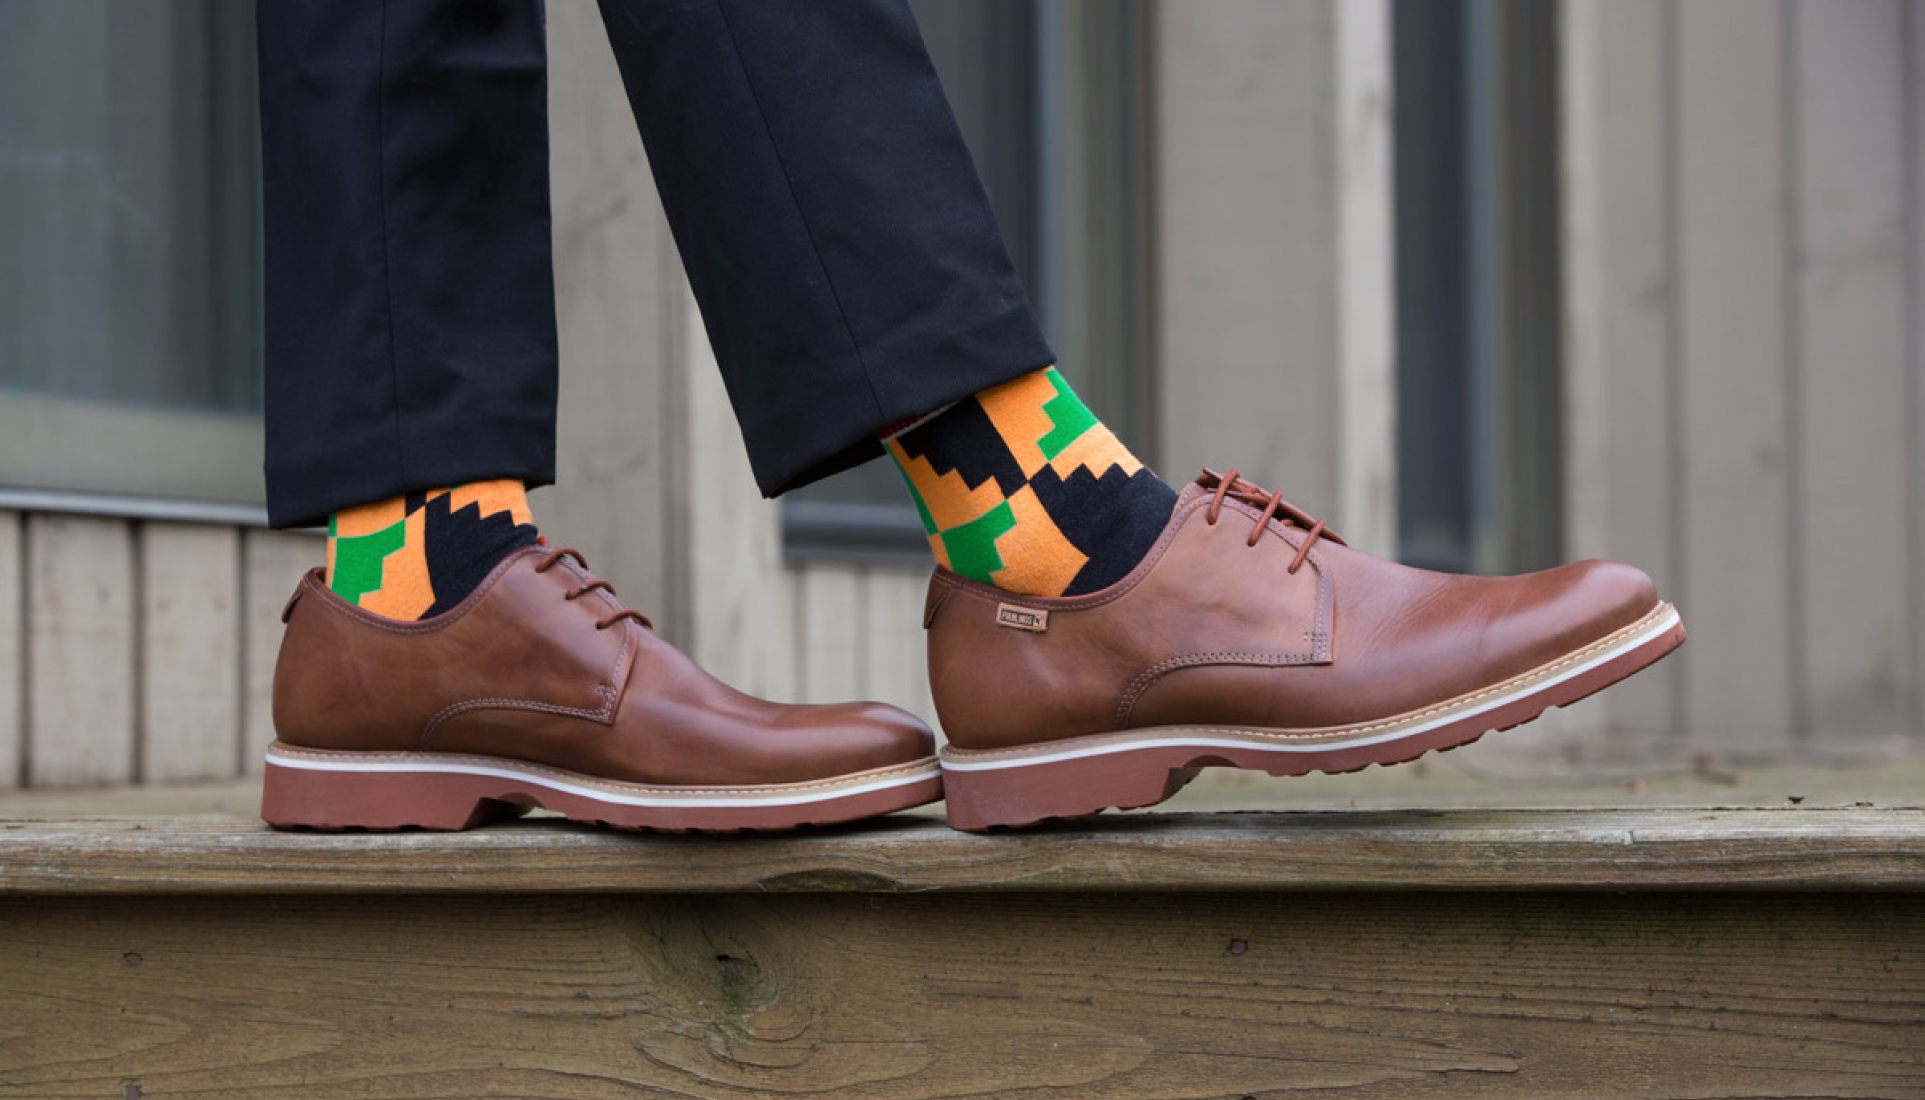 Mens-colorful-socks-54kingdoms-kente-lifestyle